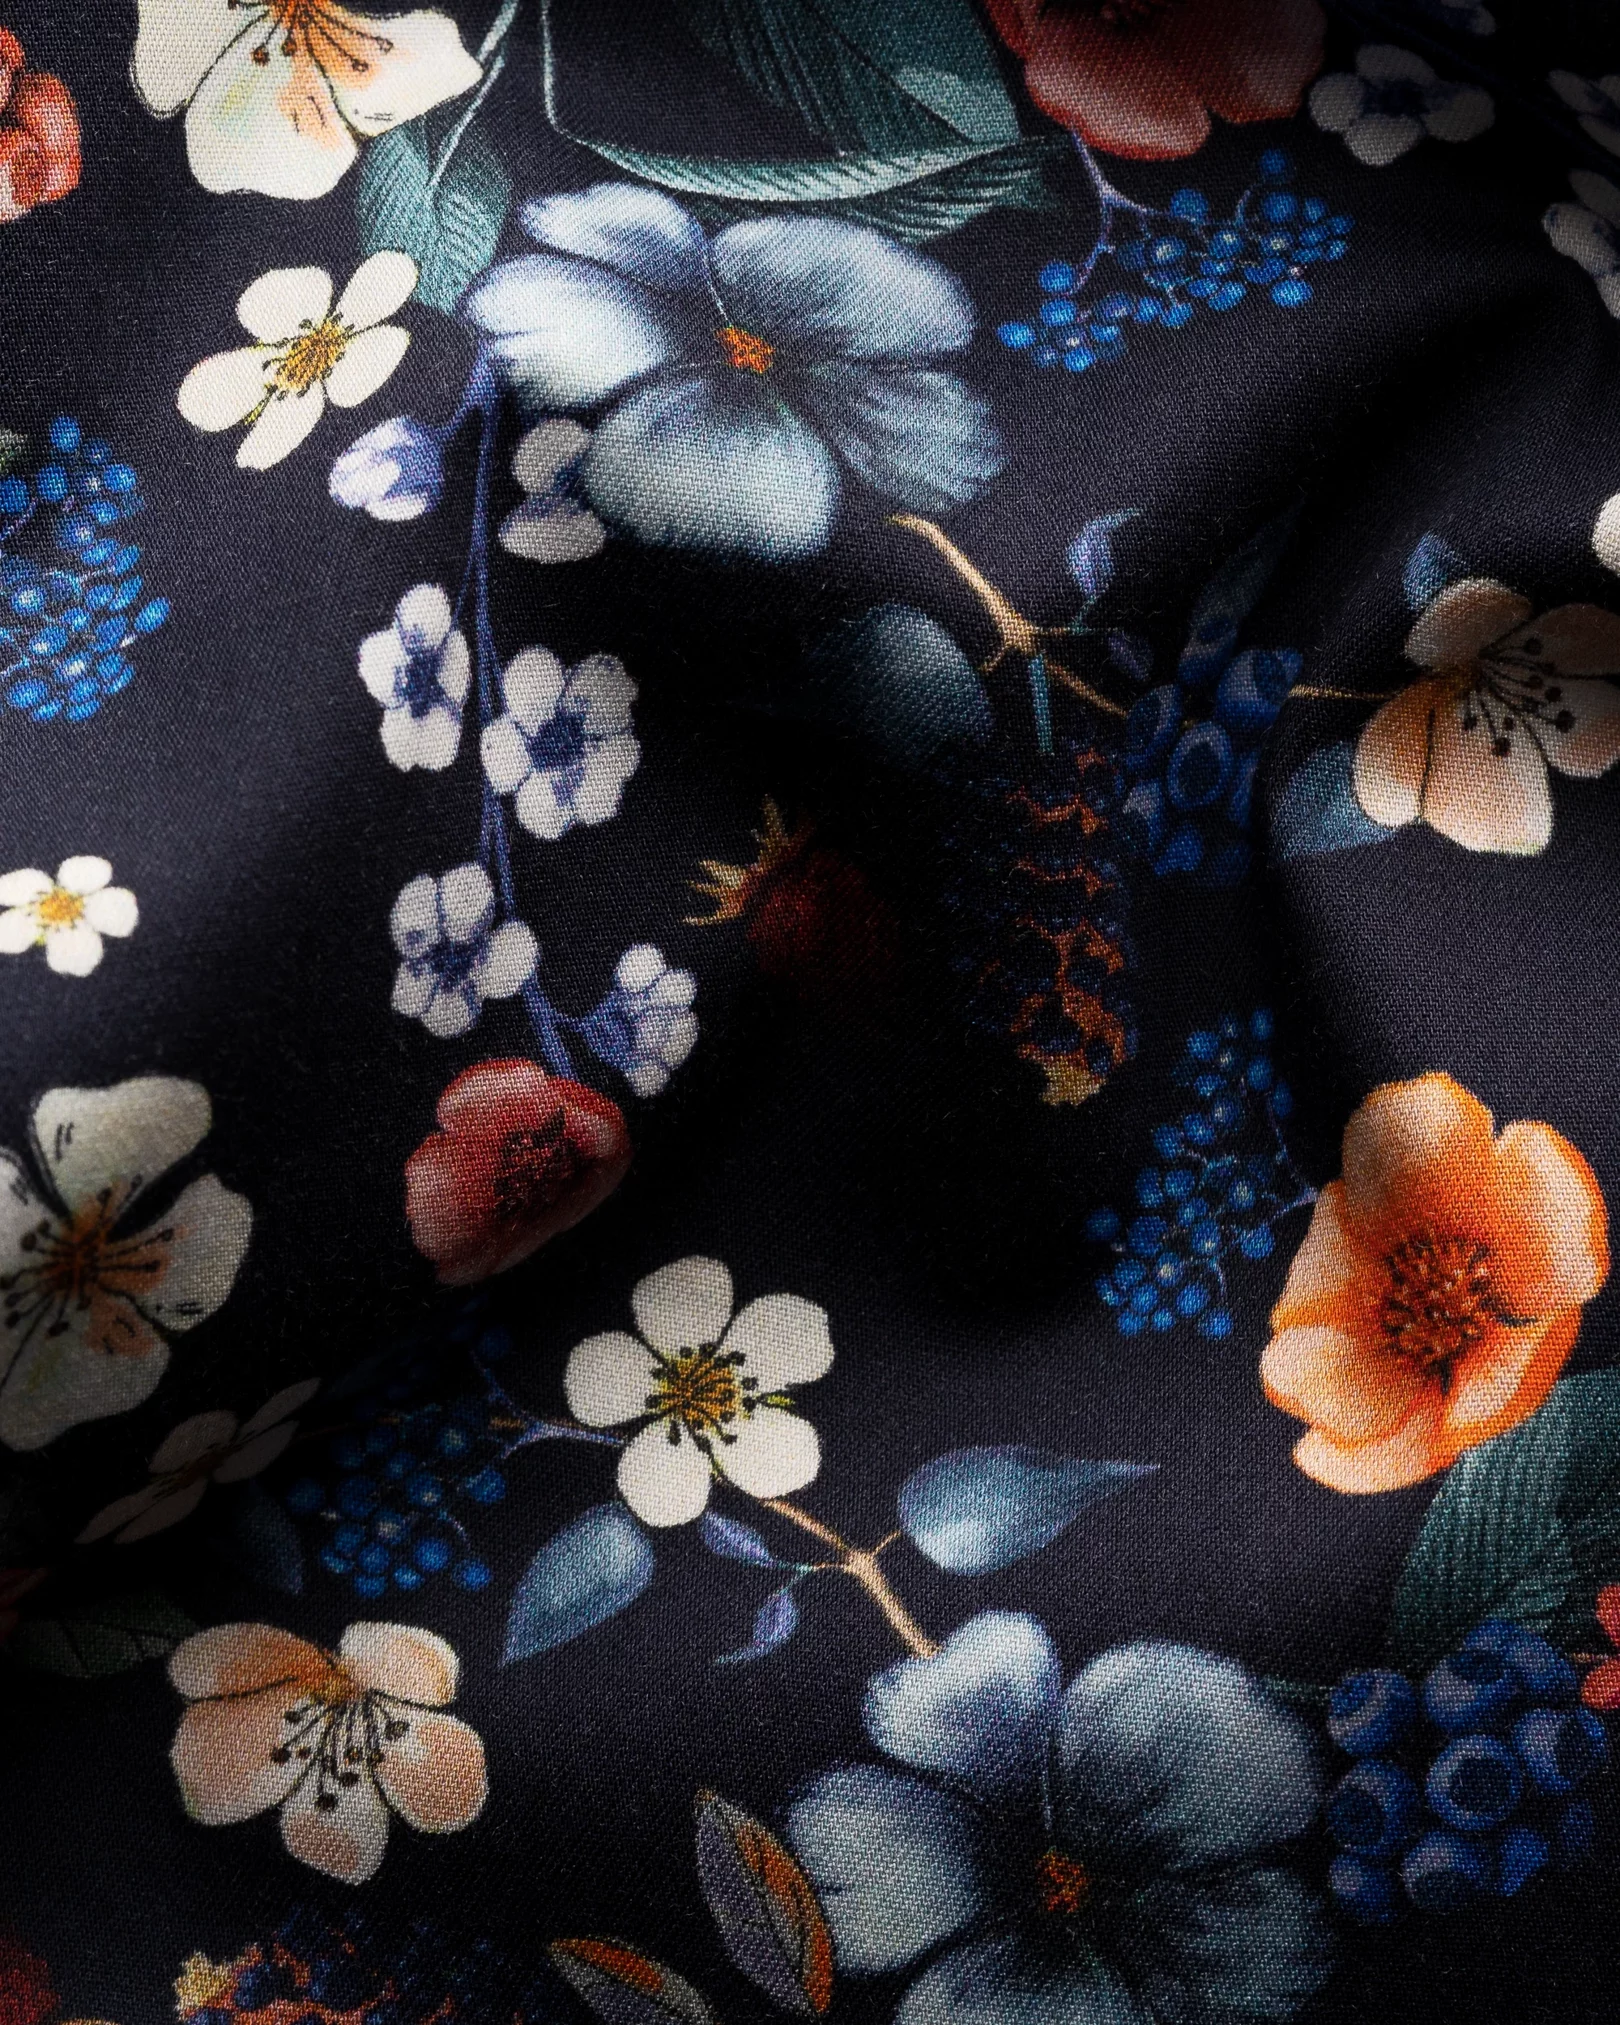 Eton - navy blue floral signature twill